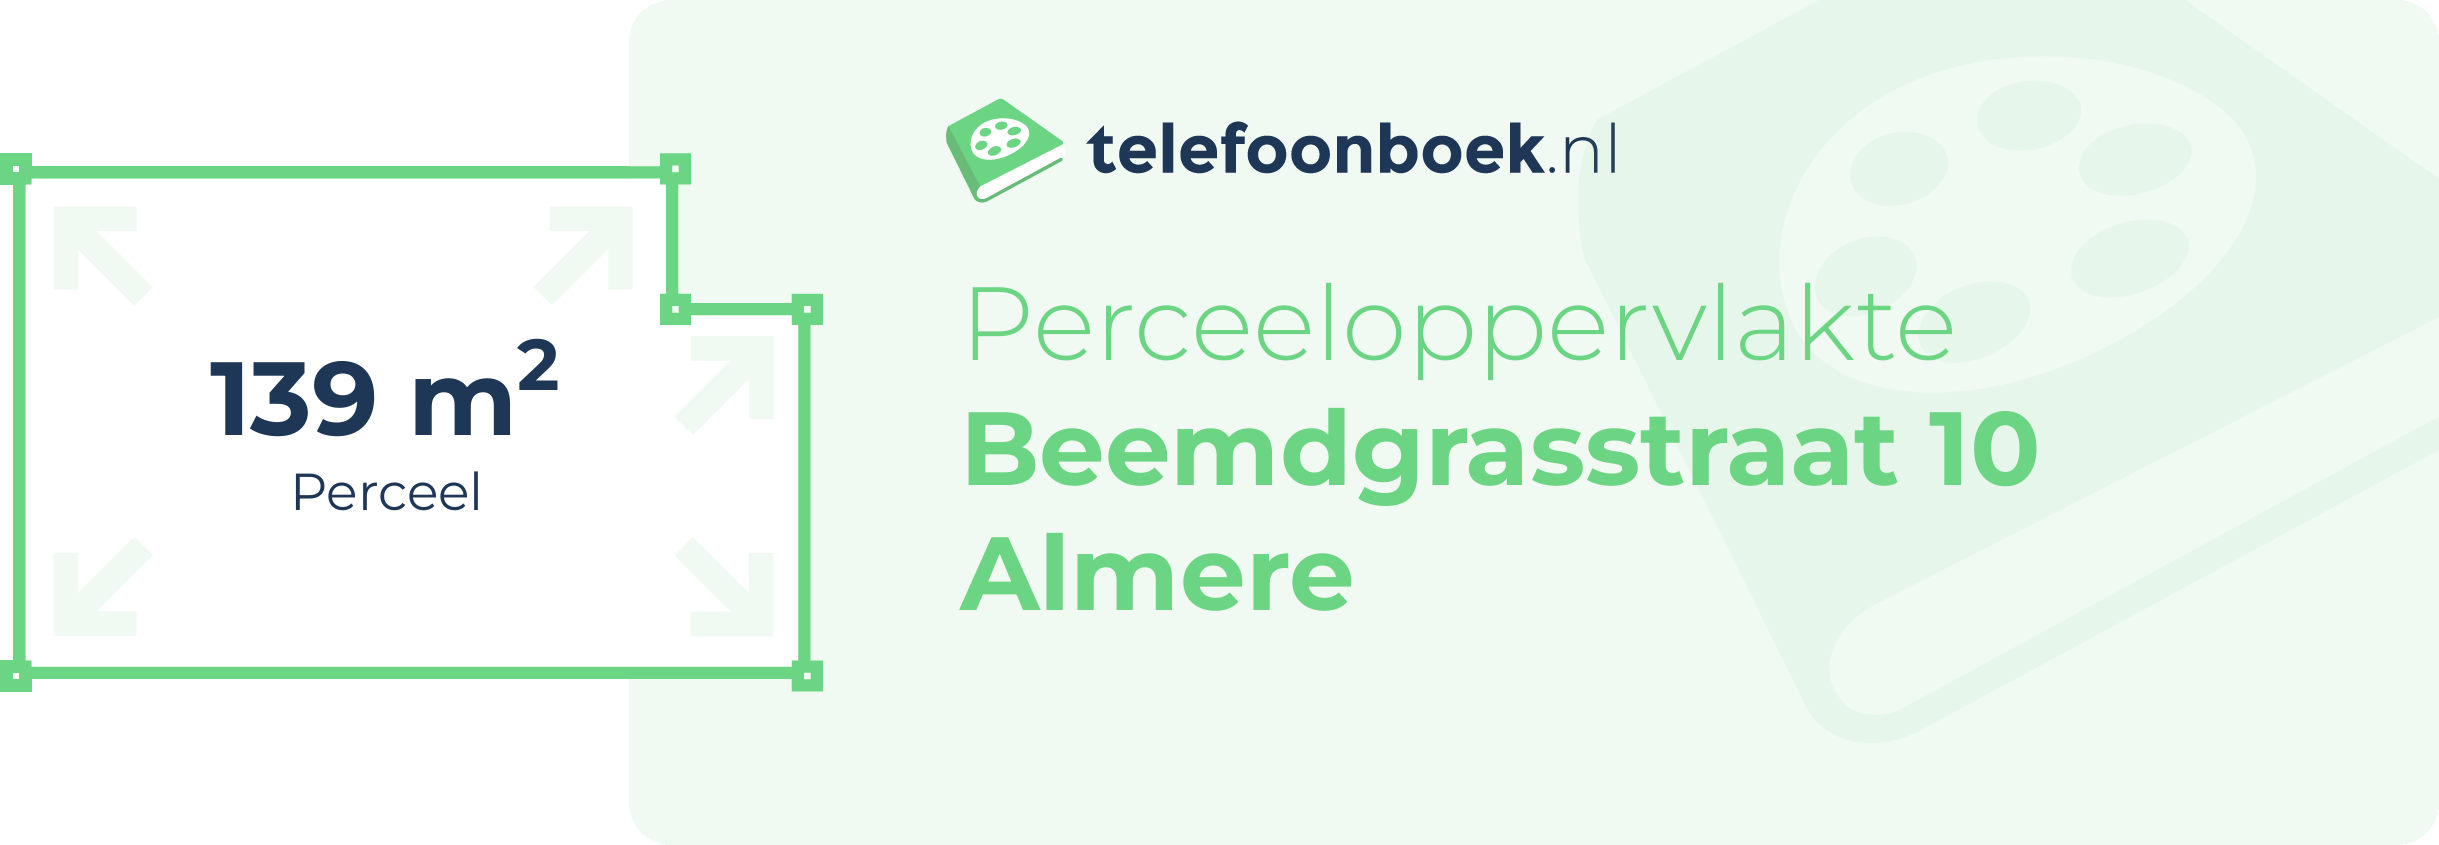 Perceeloppervlakte Beemdgrasstraat 10 Almere